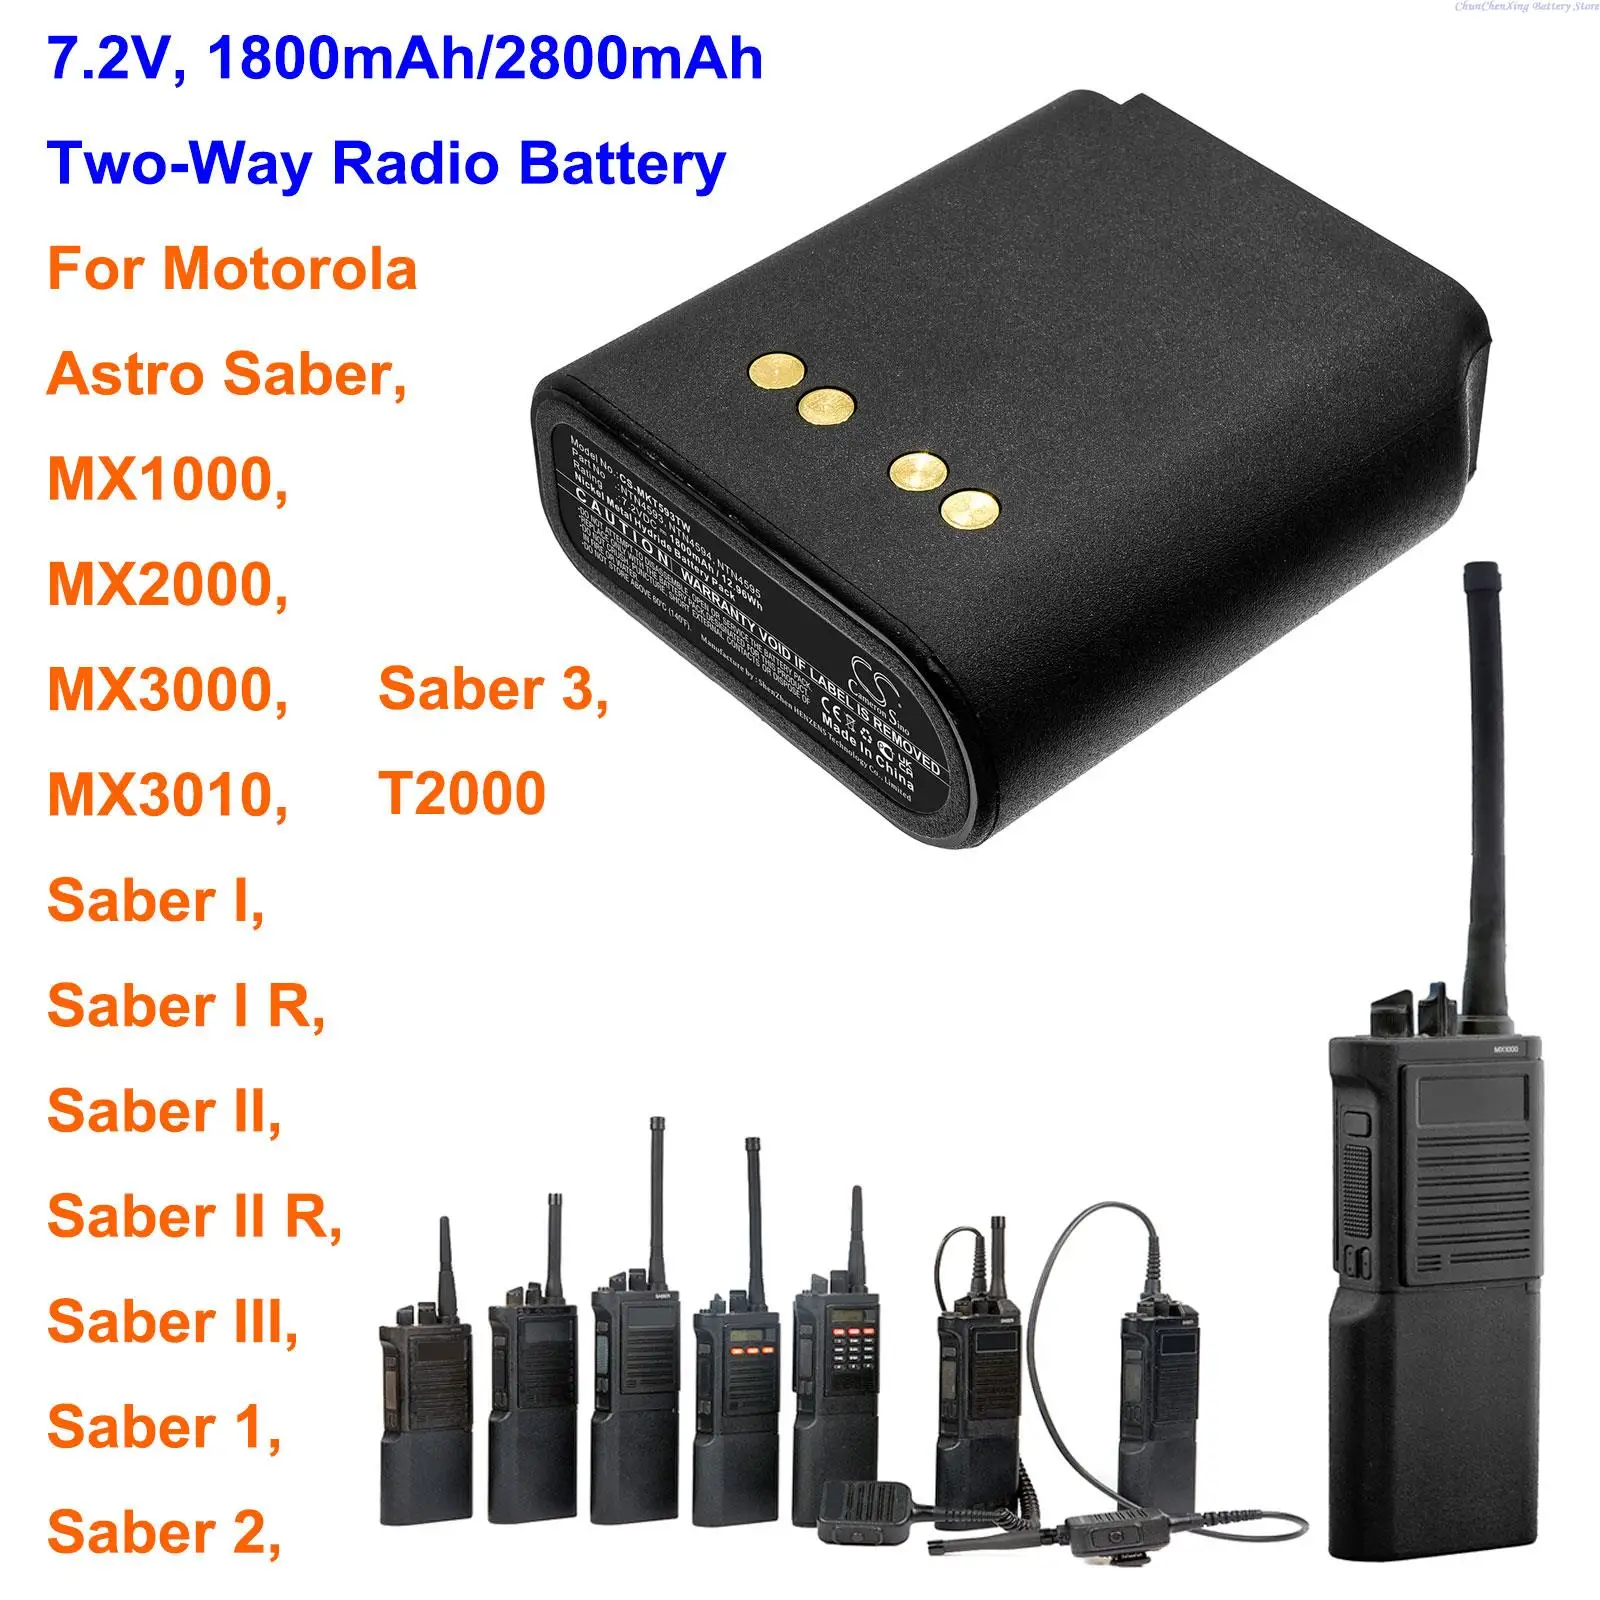 

CS 1800mAh/2800mAh Two-Way Radio Battery for Motorola MX1000, MX2000, MX3000, MX3010, Saber 1, Saber 2, Saber 3, T2000